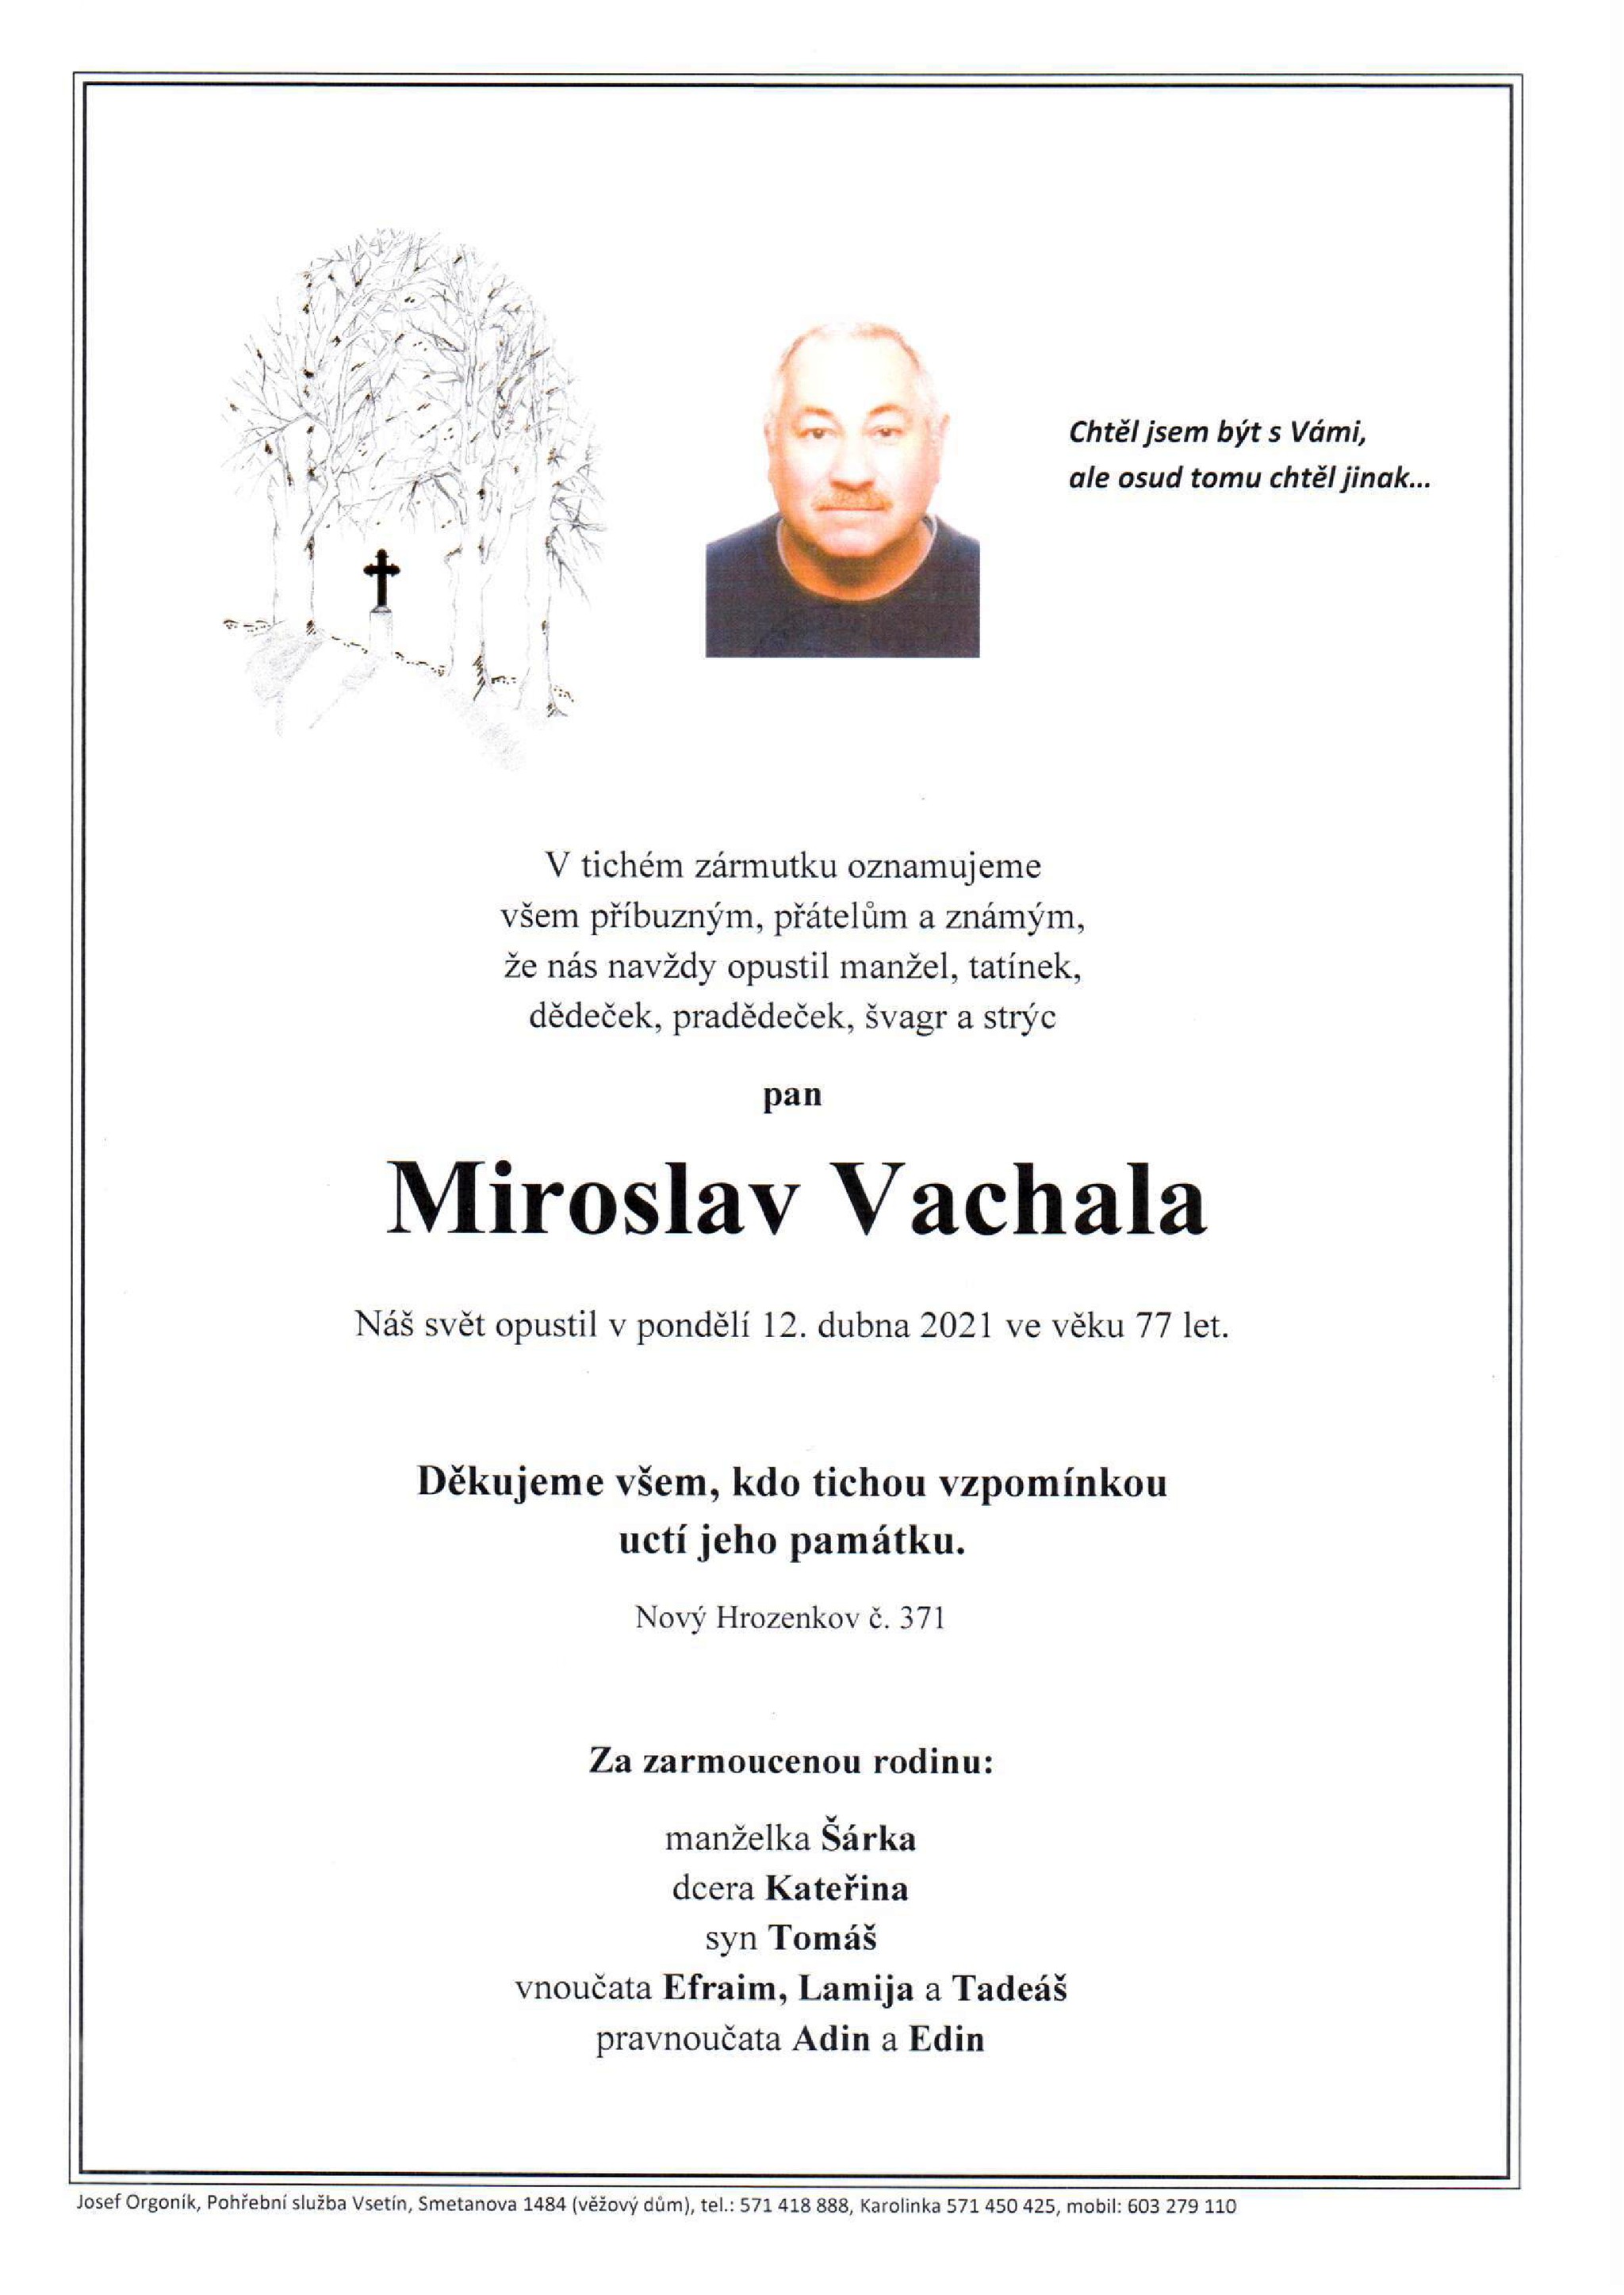 Miroslav Vachala